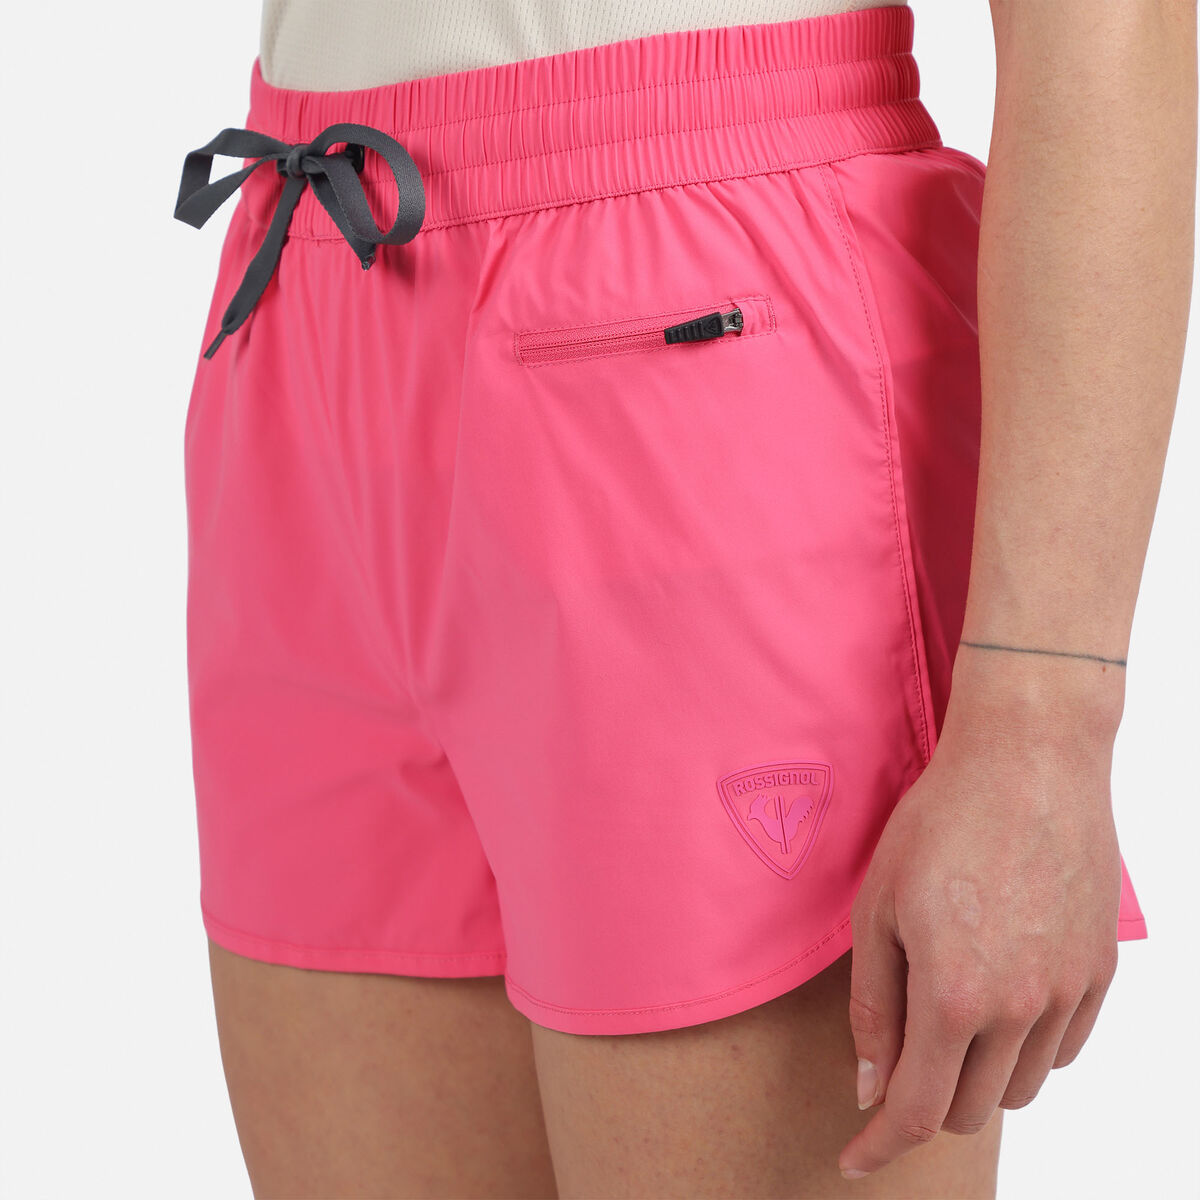 Rossignol Women's Basic Shorts pinkpurple